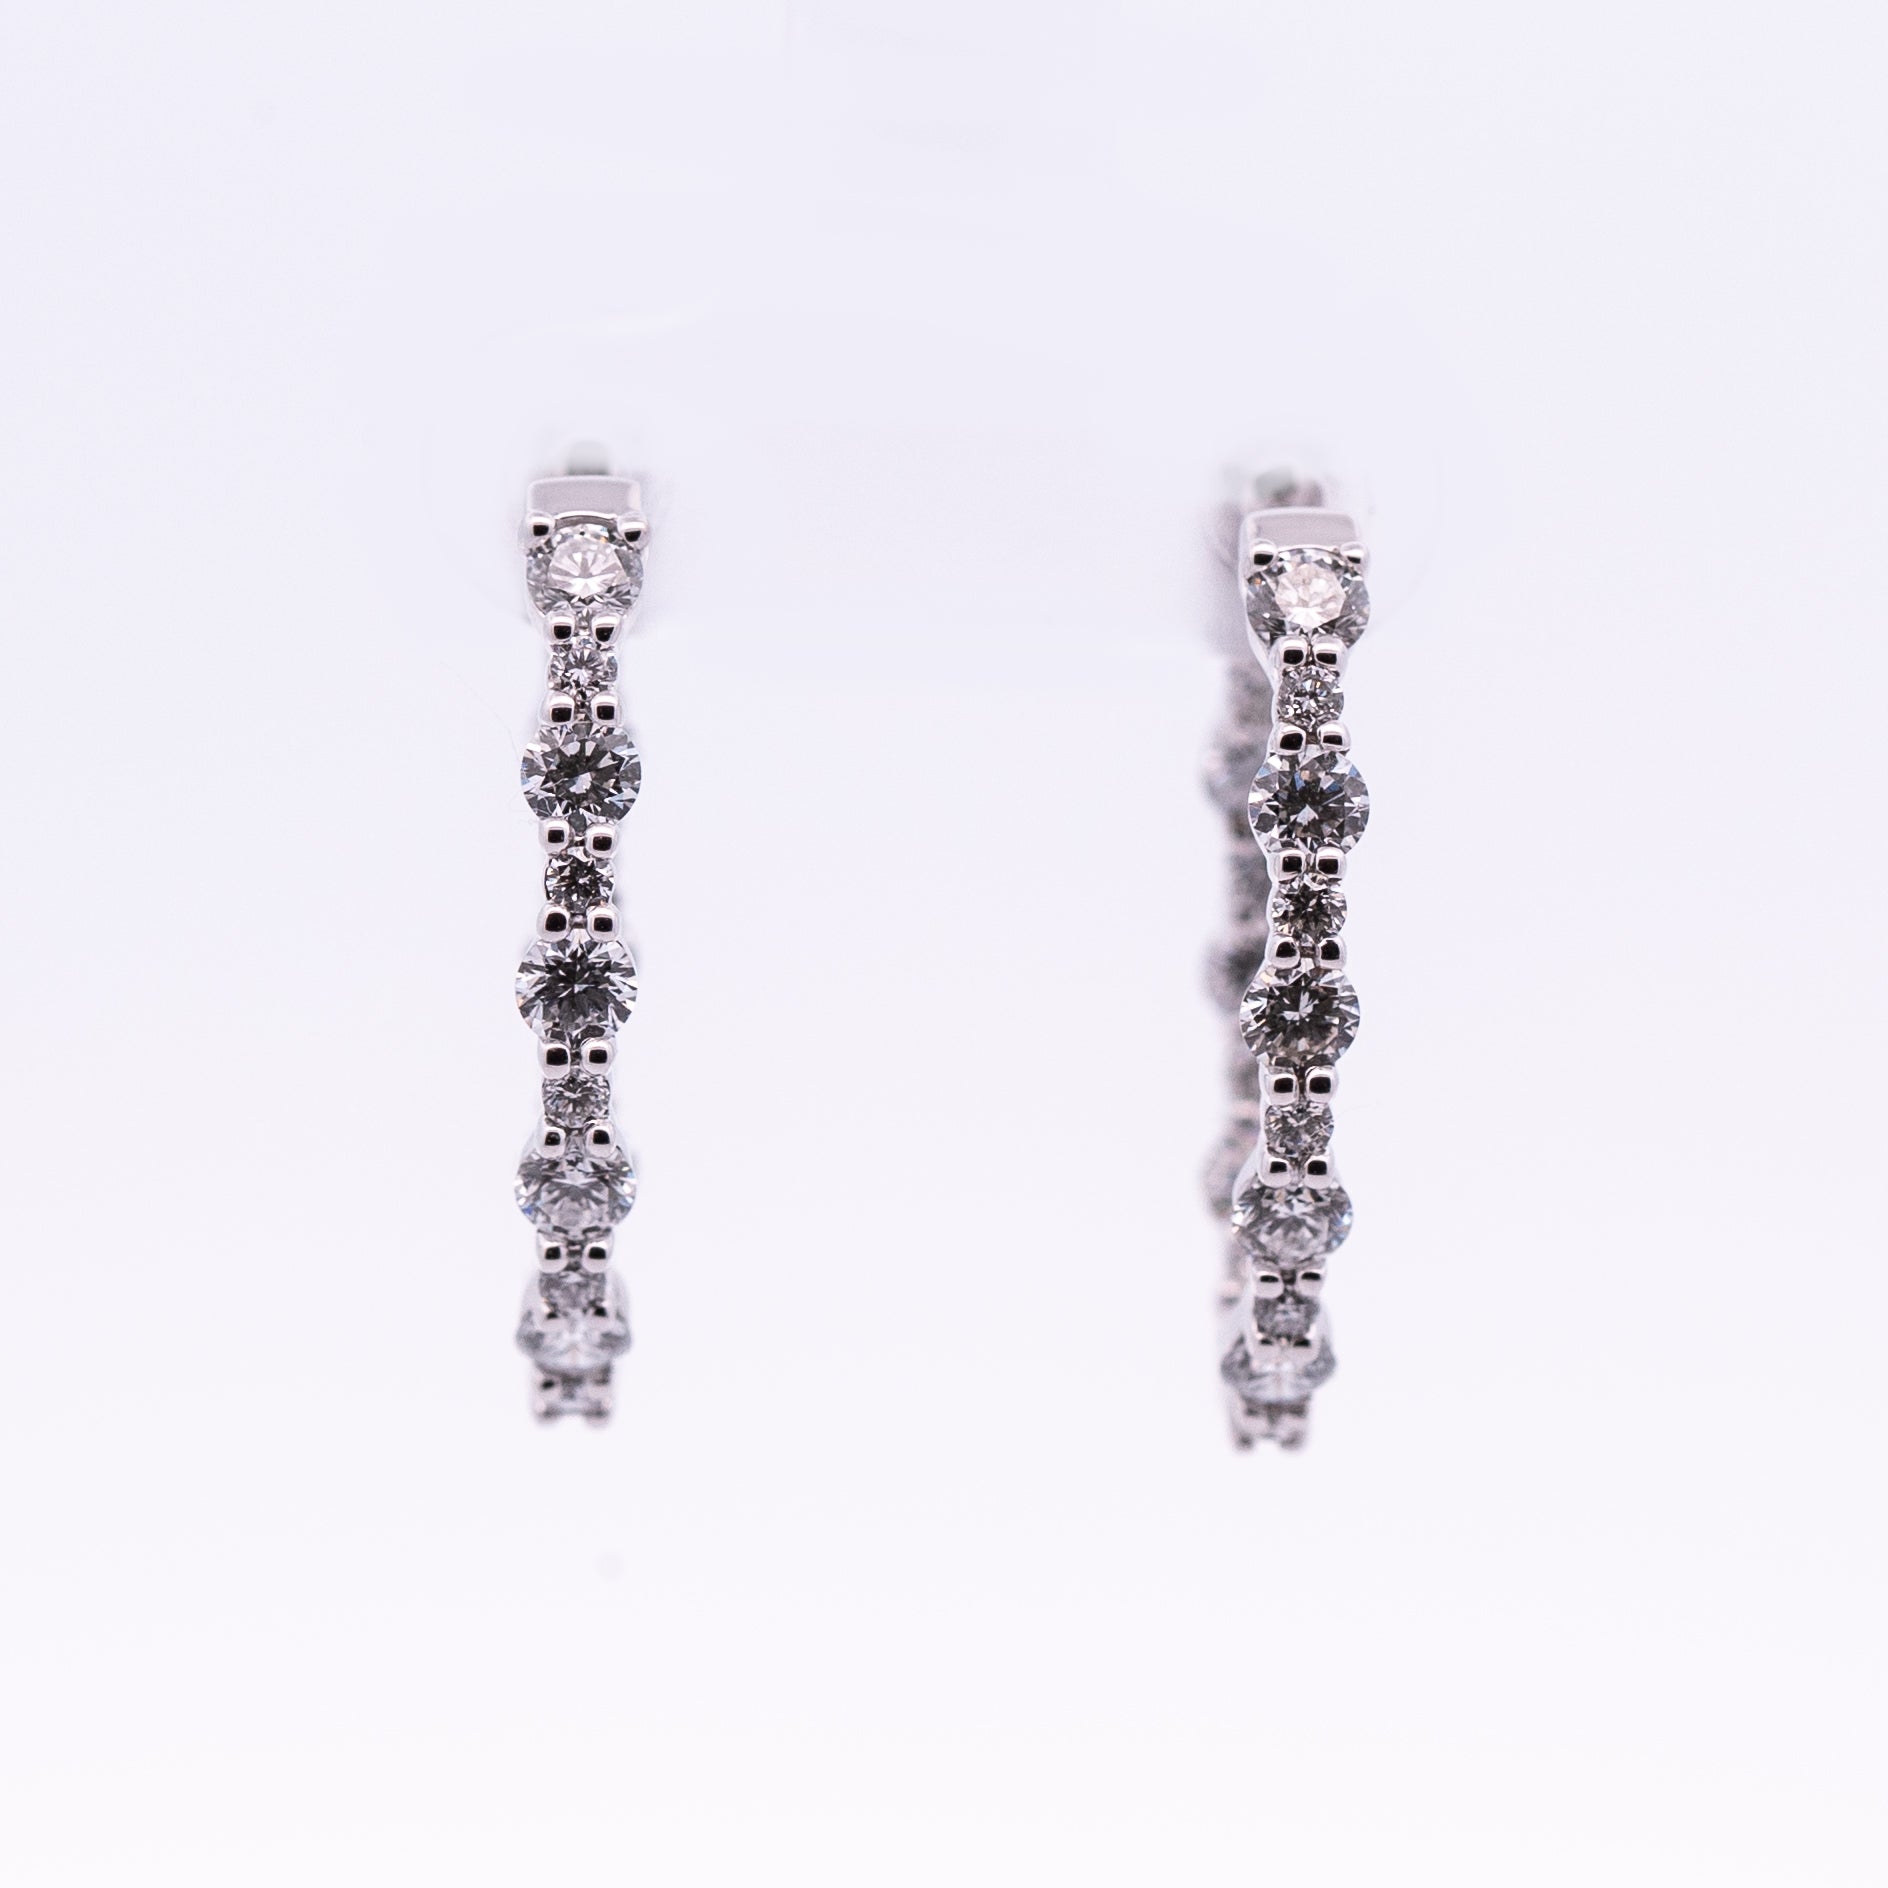 Style: Hoop Description: Diamond Earrings - Diamond Earrings - New Born Created